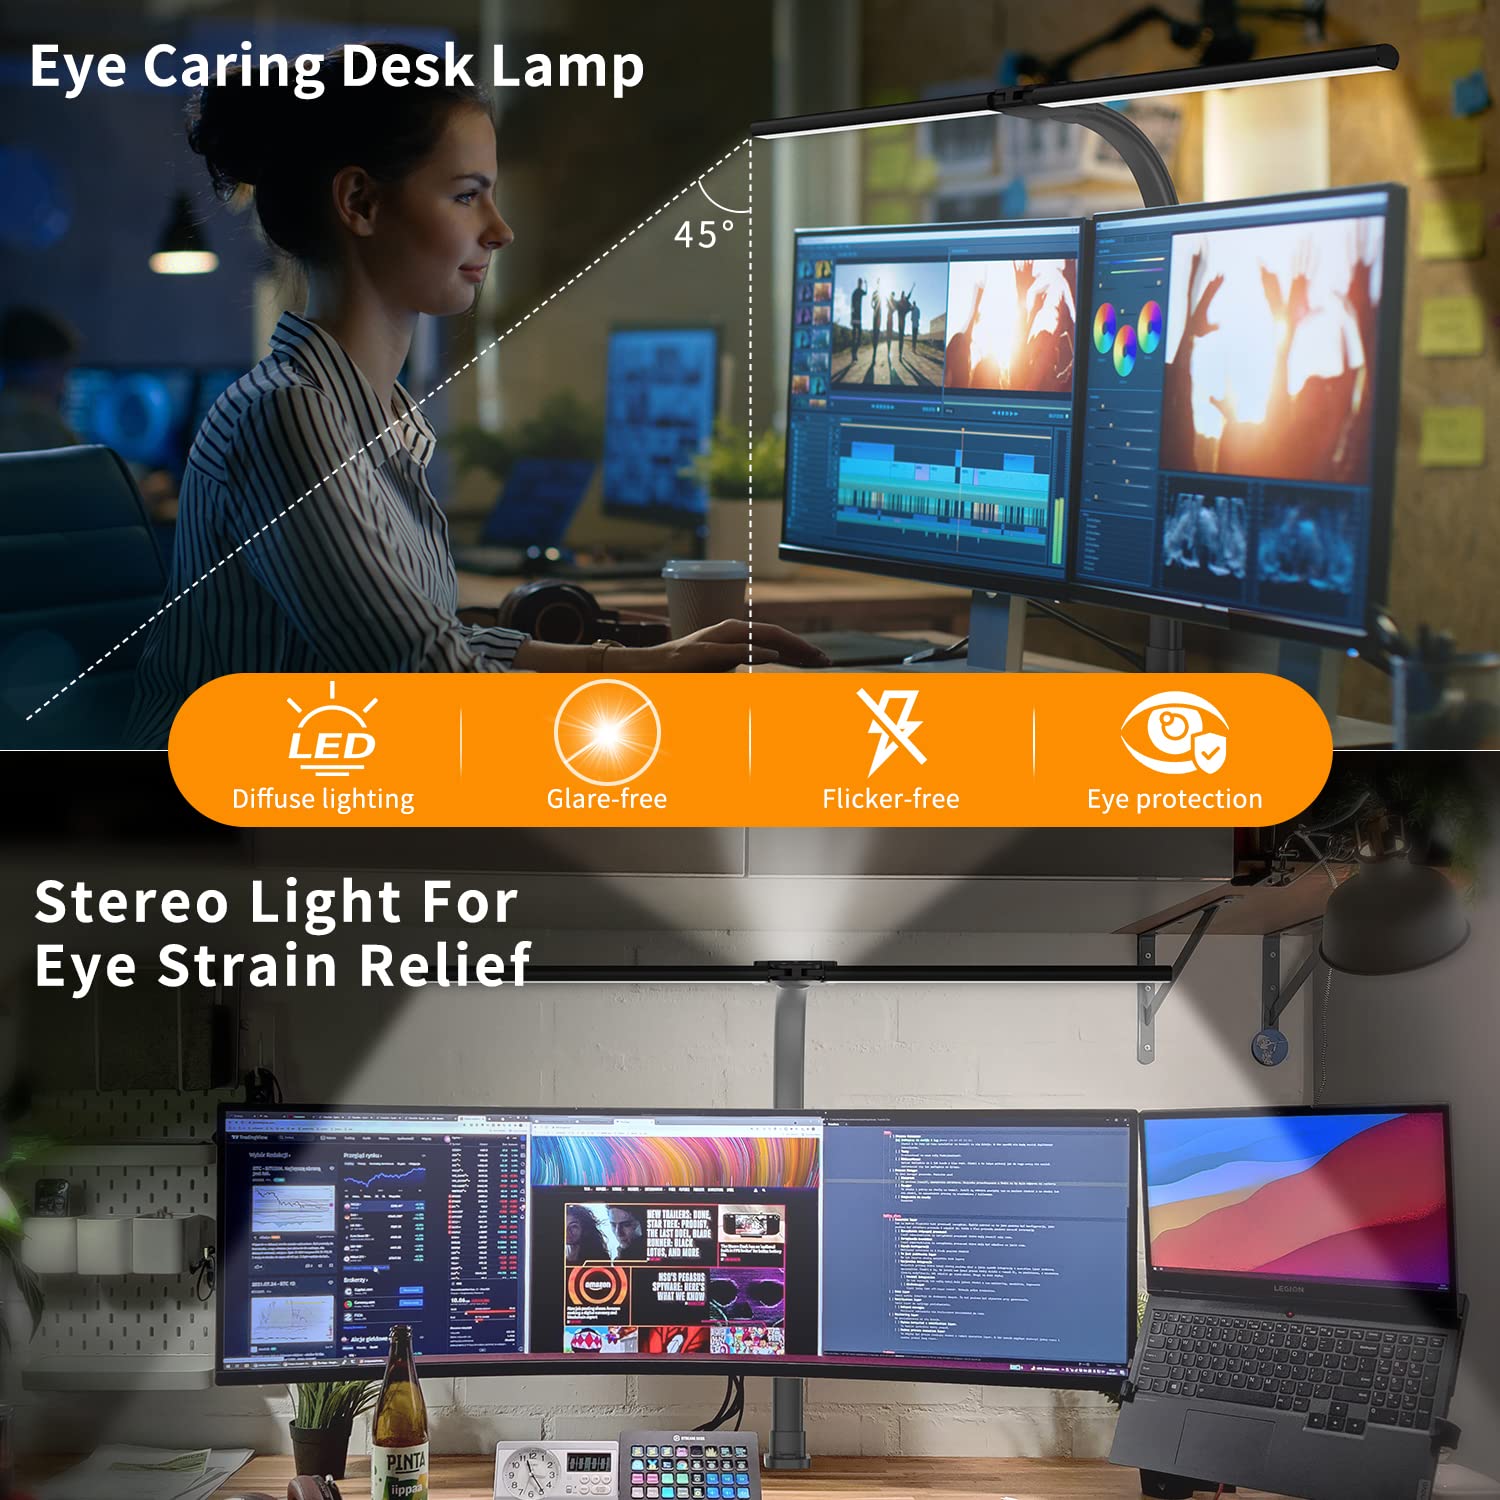 sandiea LED Desk Lamp for Home Office - 24W Bright Double Head Desk Light with Clamp Eye Caring Architect Task Light 25 Lighting Modes Adjustable Flexible Gooseneck Lamp for Workbench Drafting Study